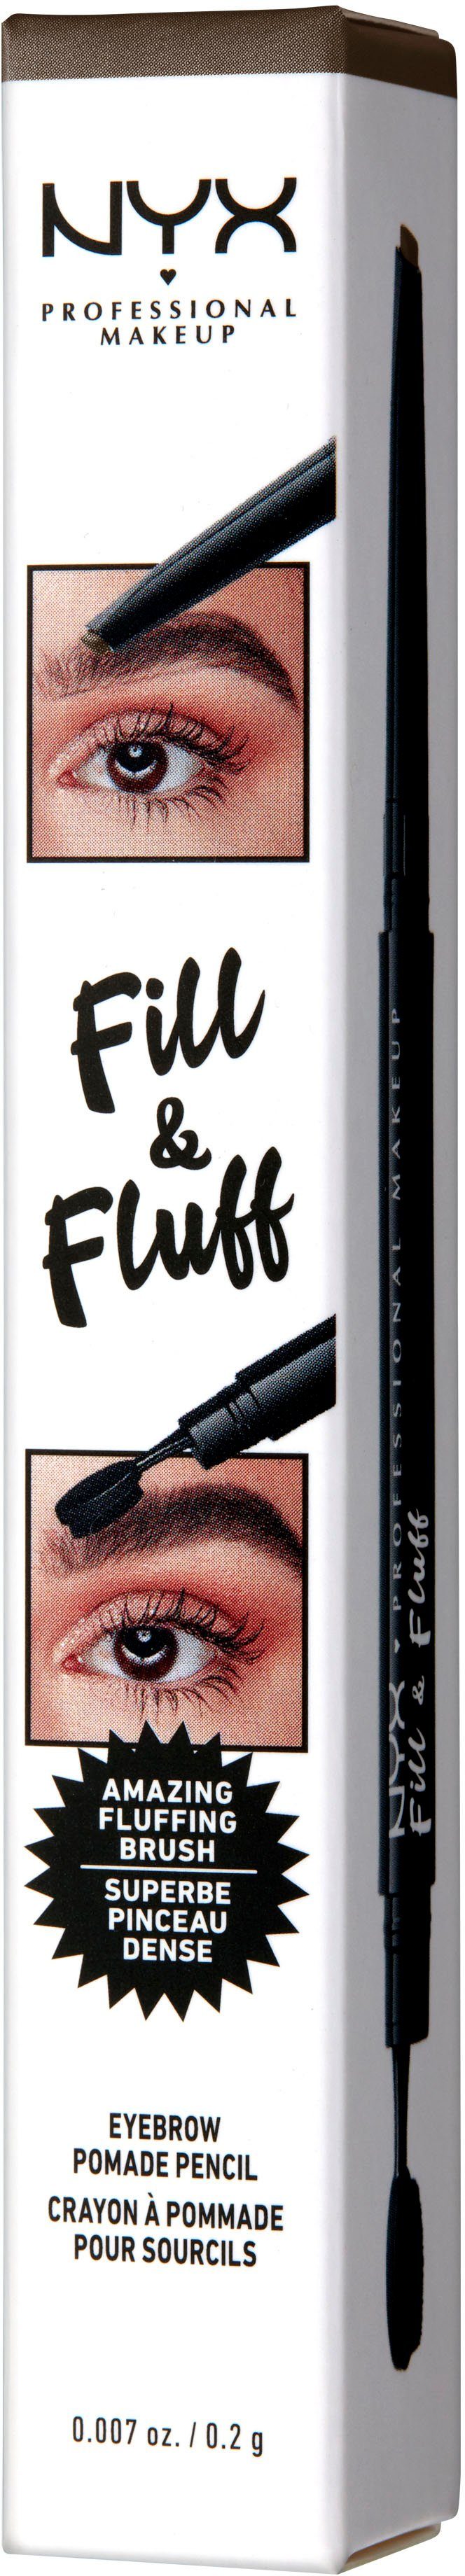 NYX Augenbrauen-Stift Professional & ash brown Fill Eyebrow Fluff Pencil Makeup Pomade